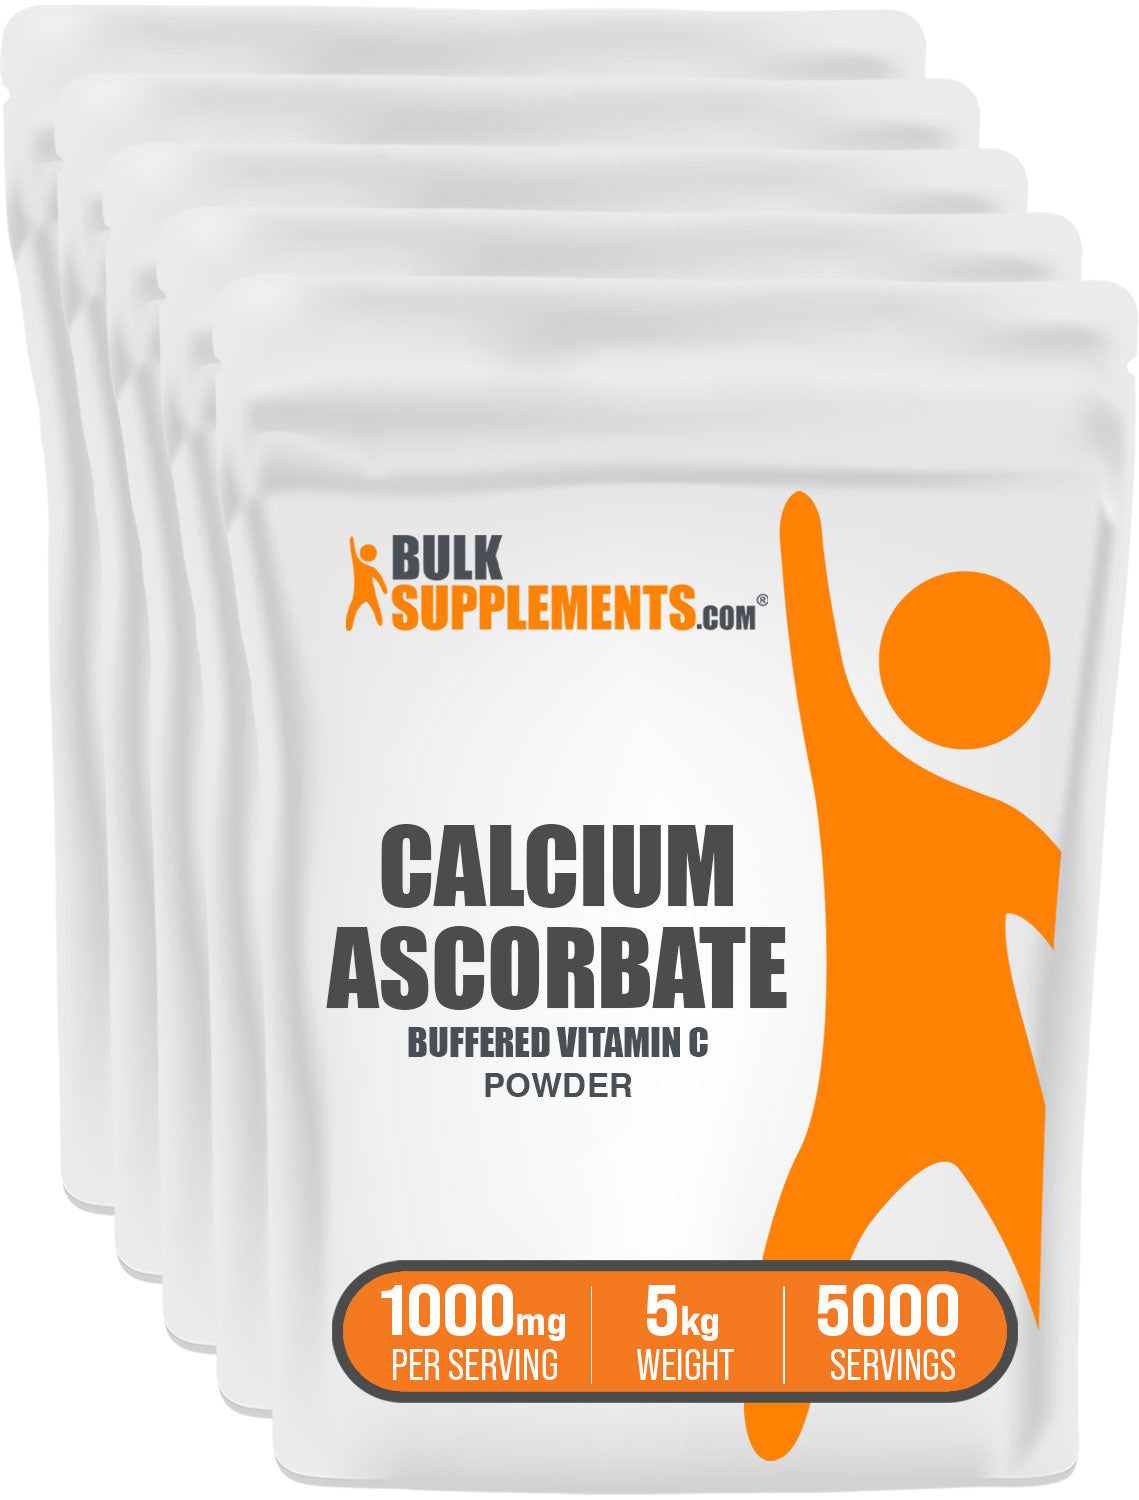 BulkSupplements.com Calcium Ascorbate 5kg bags